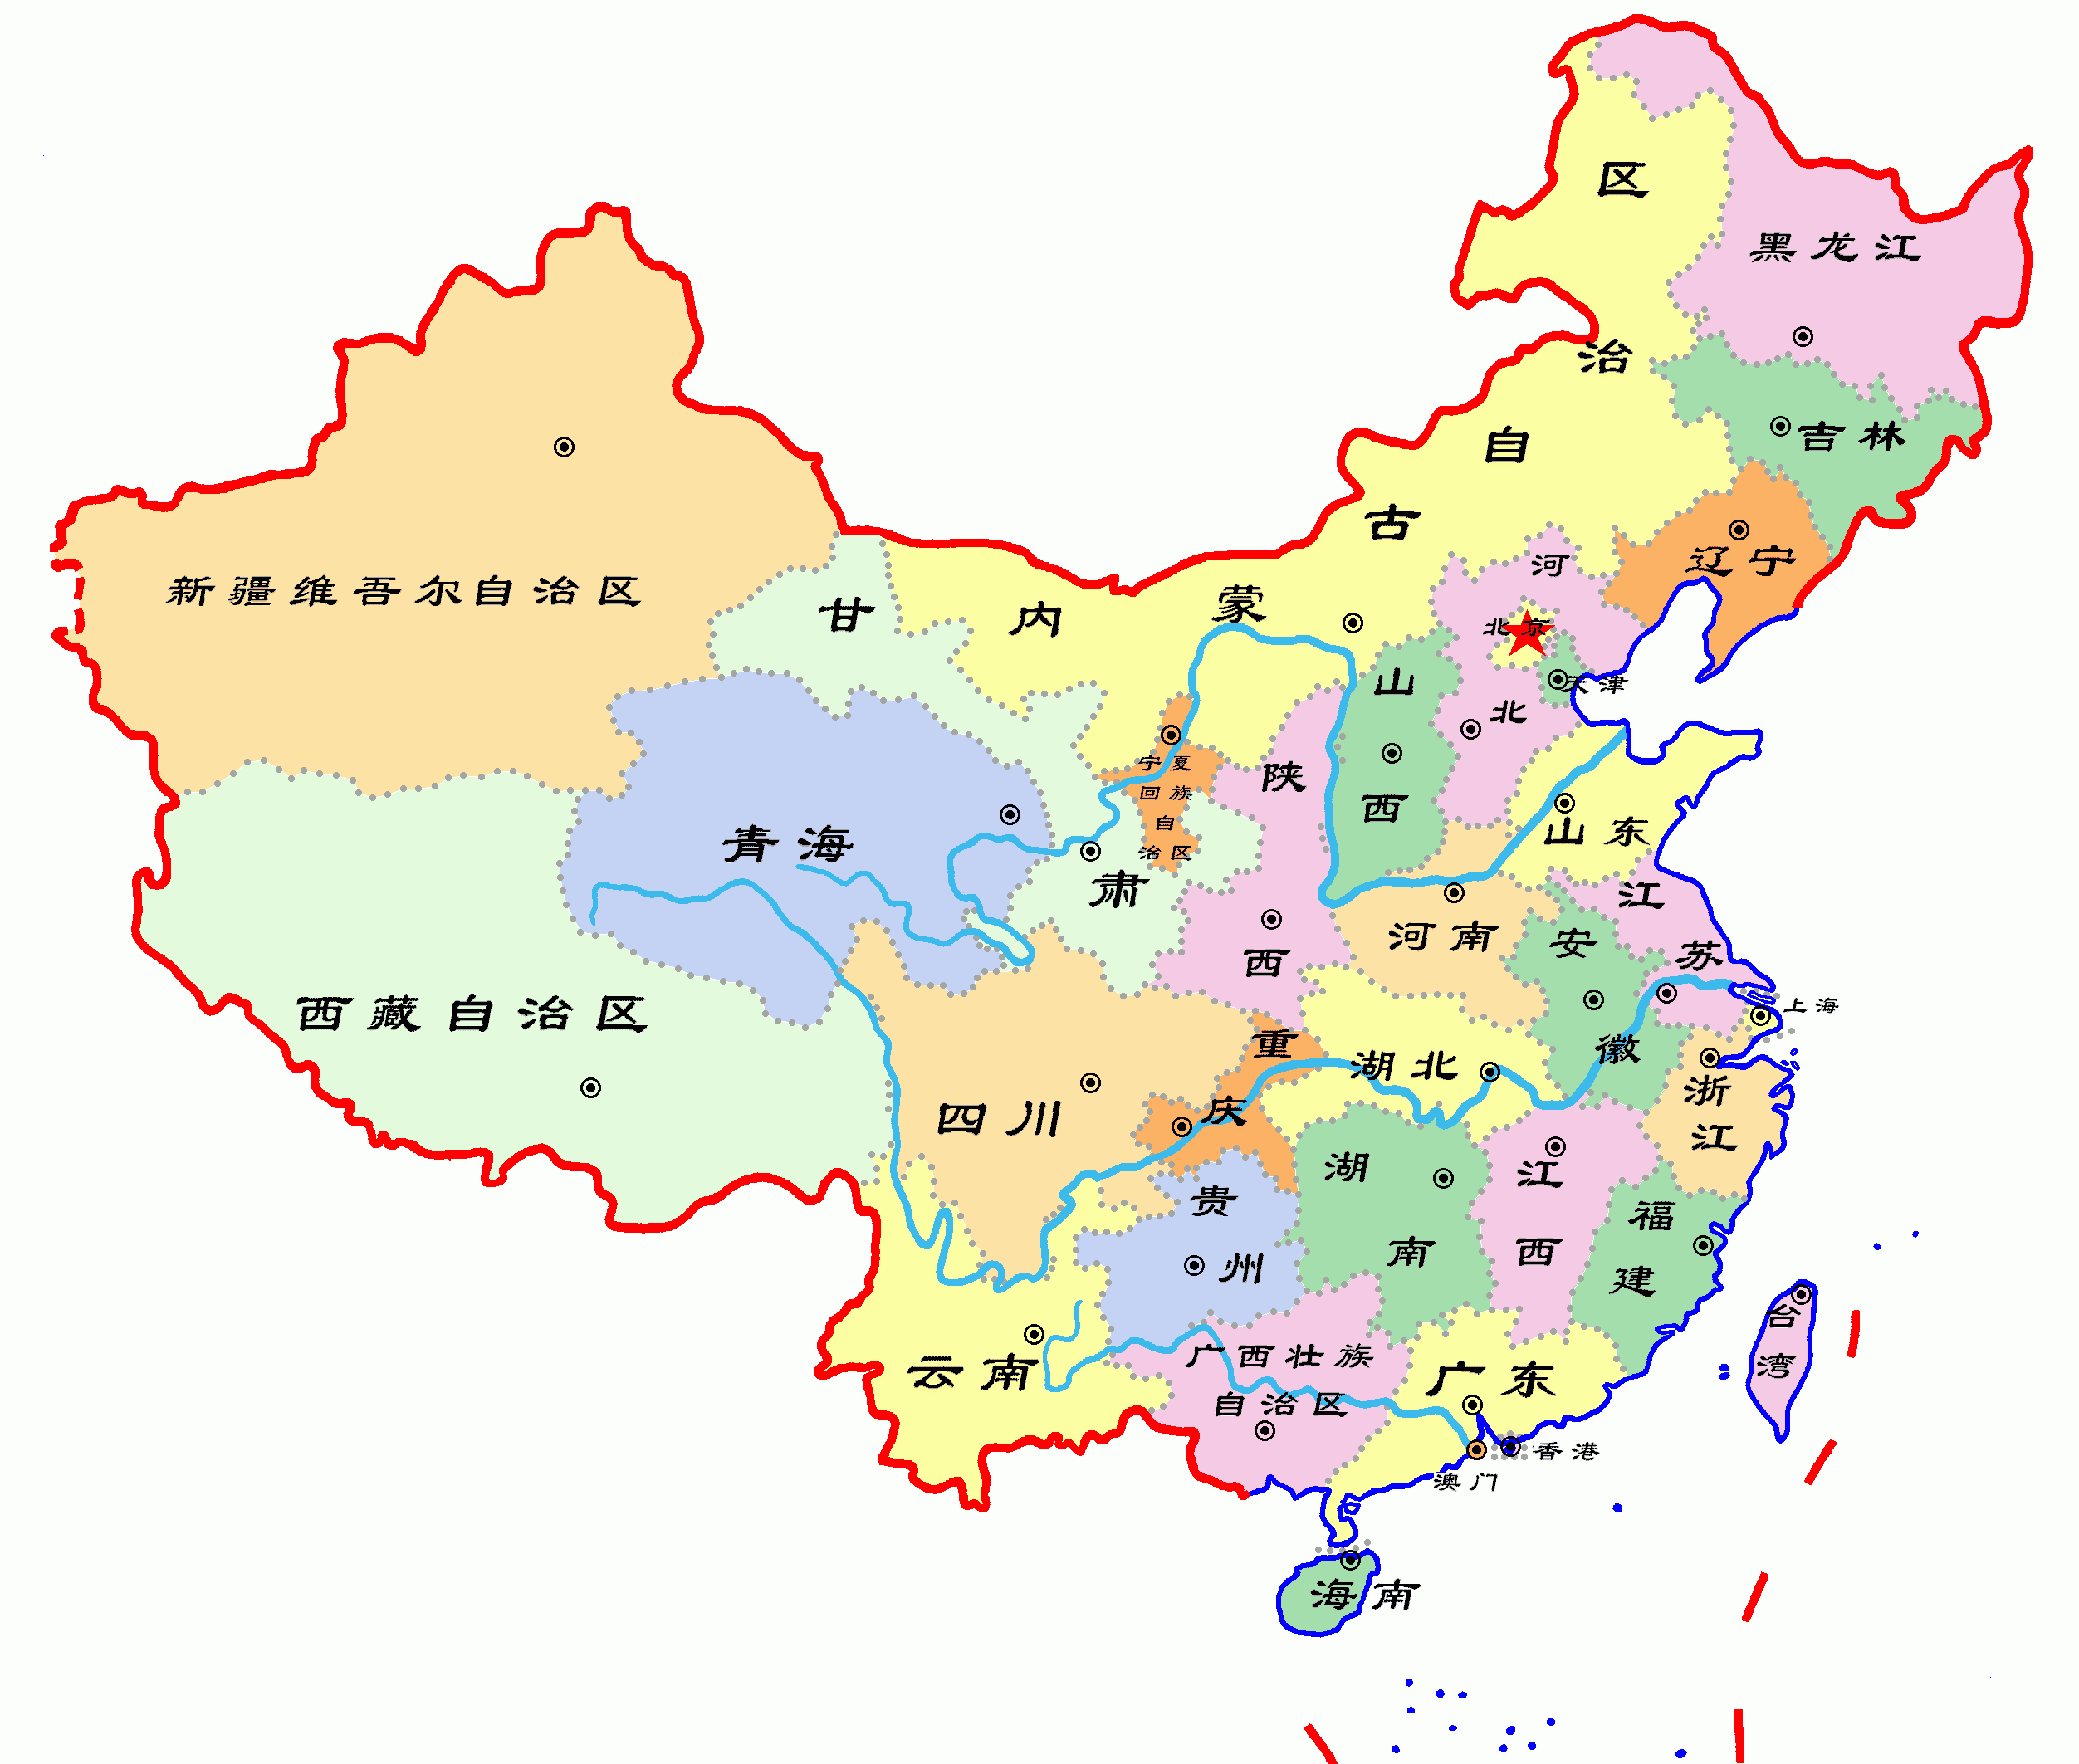 Map Of China Chinese Characters Worldofmaps Net Online Maps